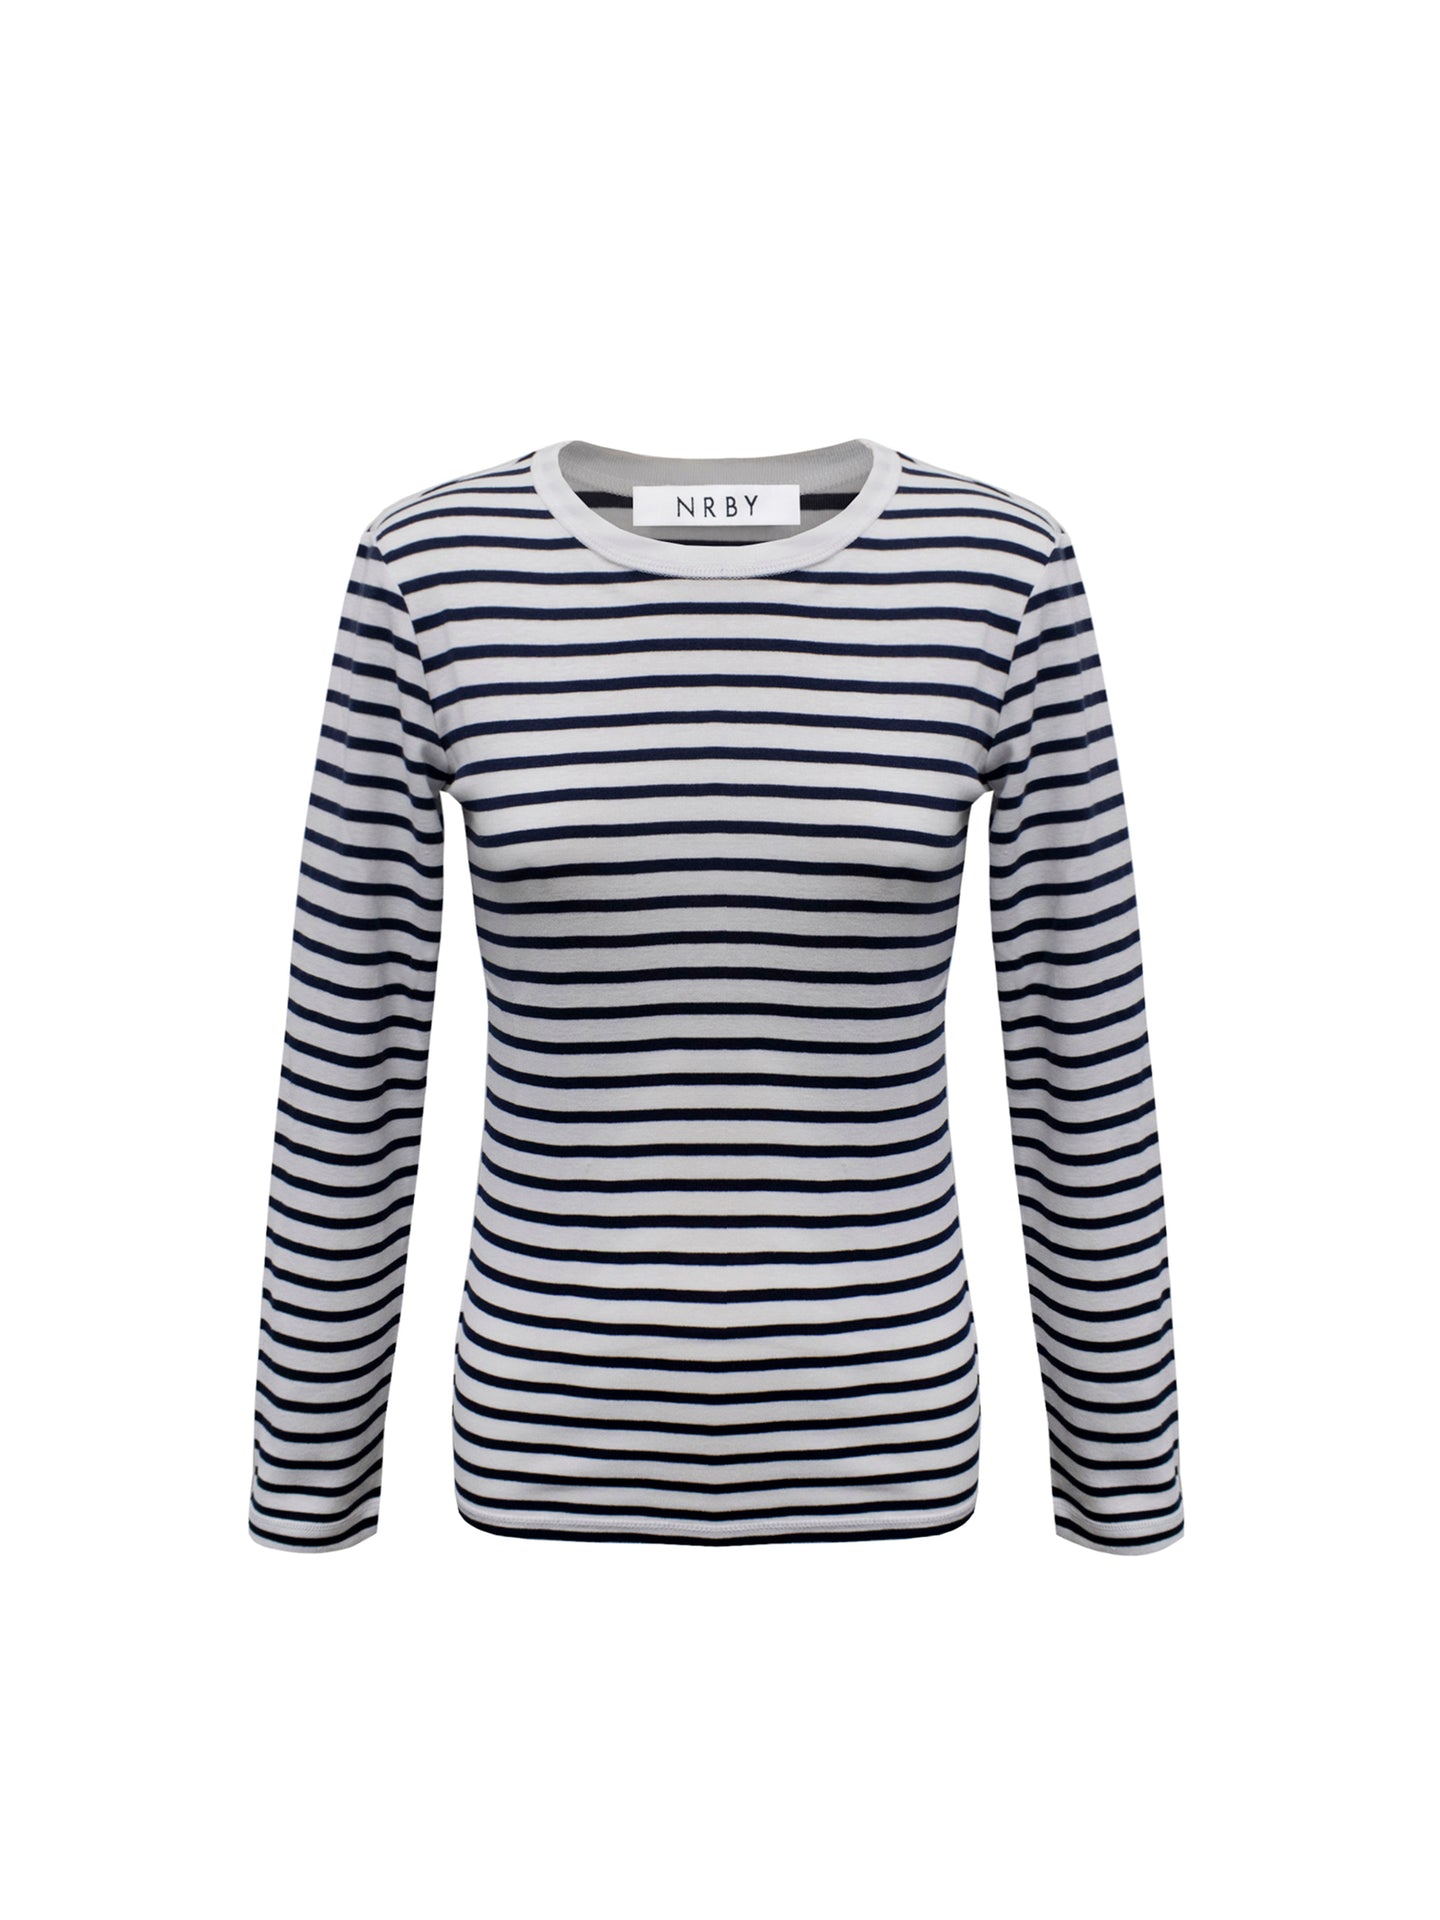 Billie cotton rib stripe t-shirt - Navy / White